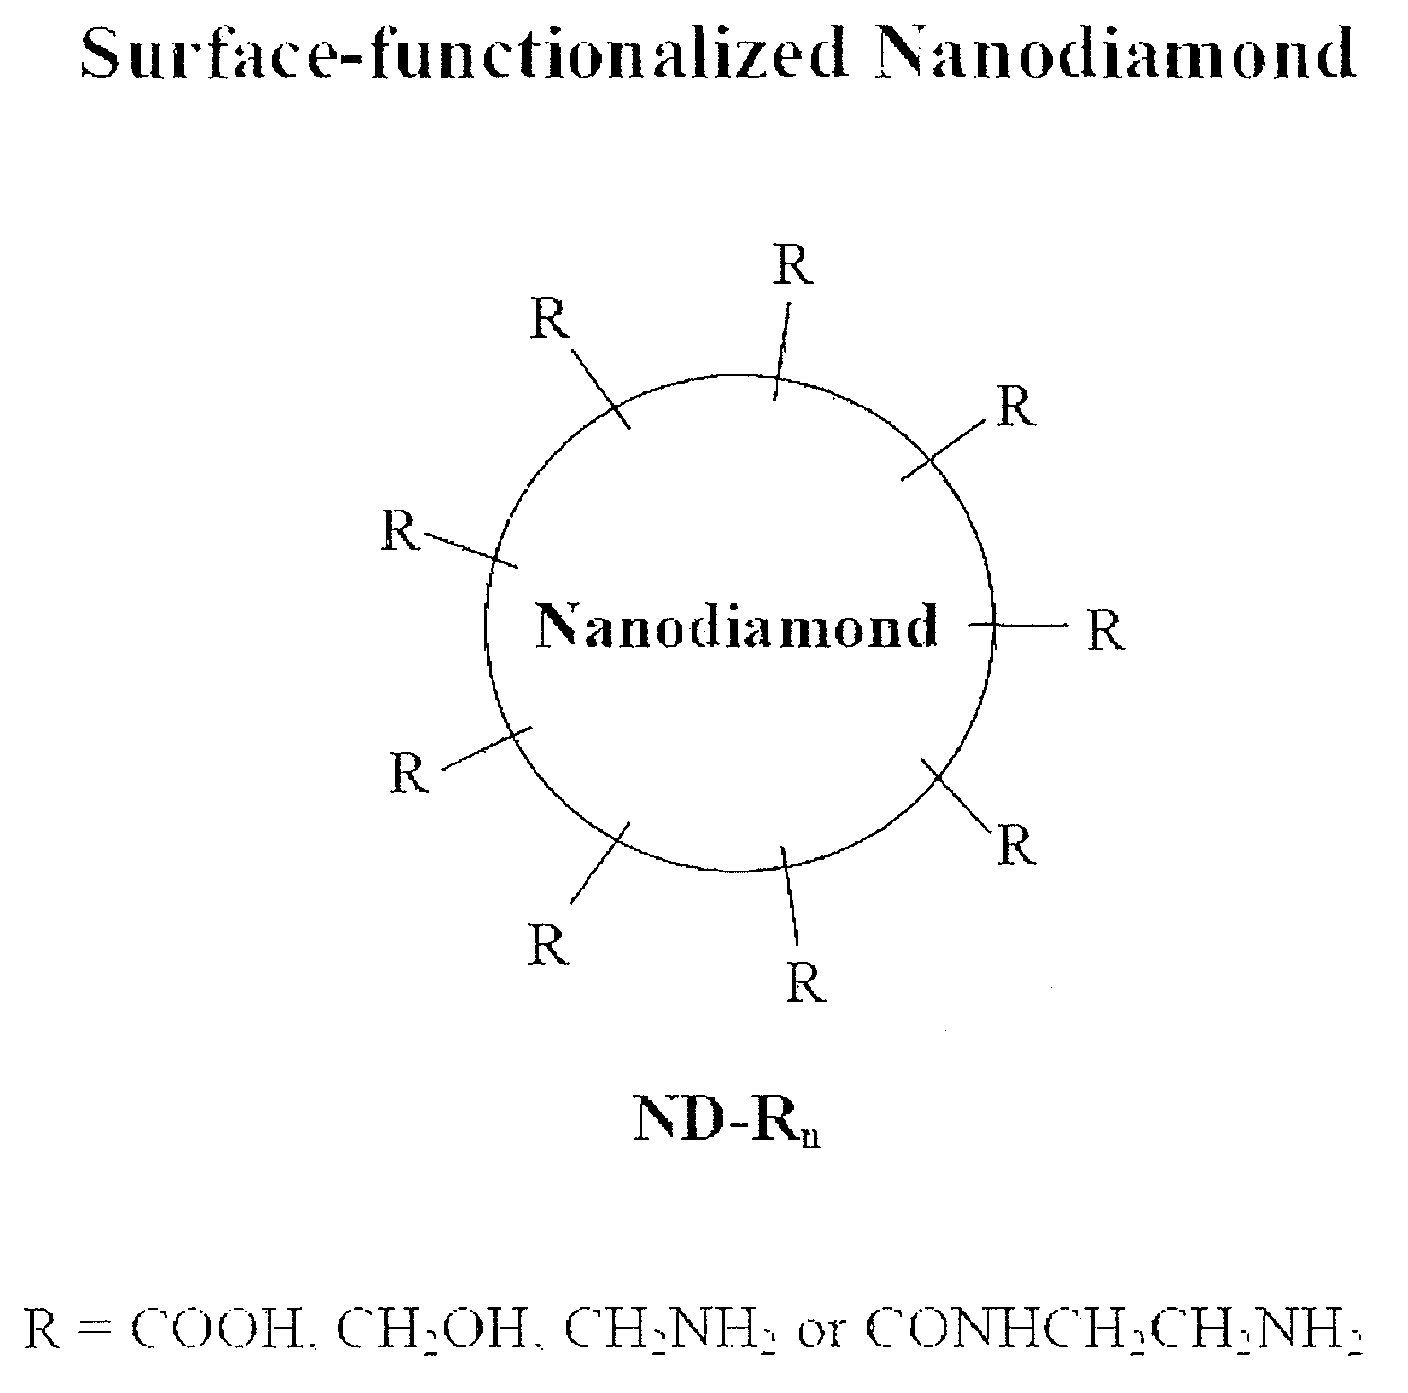 Nanodiamond compounds synthesized by surface functionalization